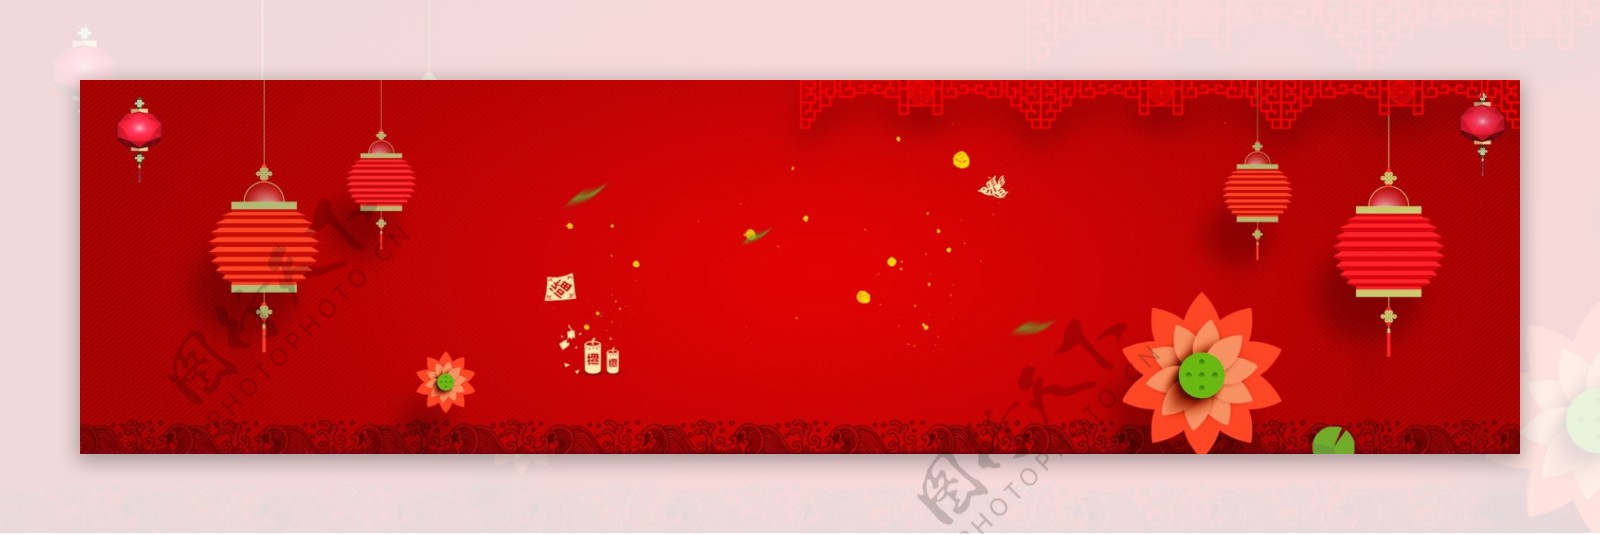 新年喜庆banner背景设计